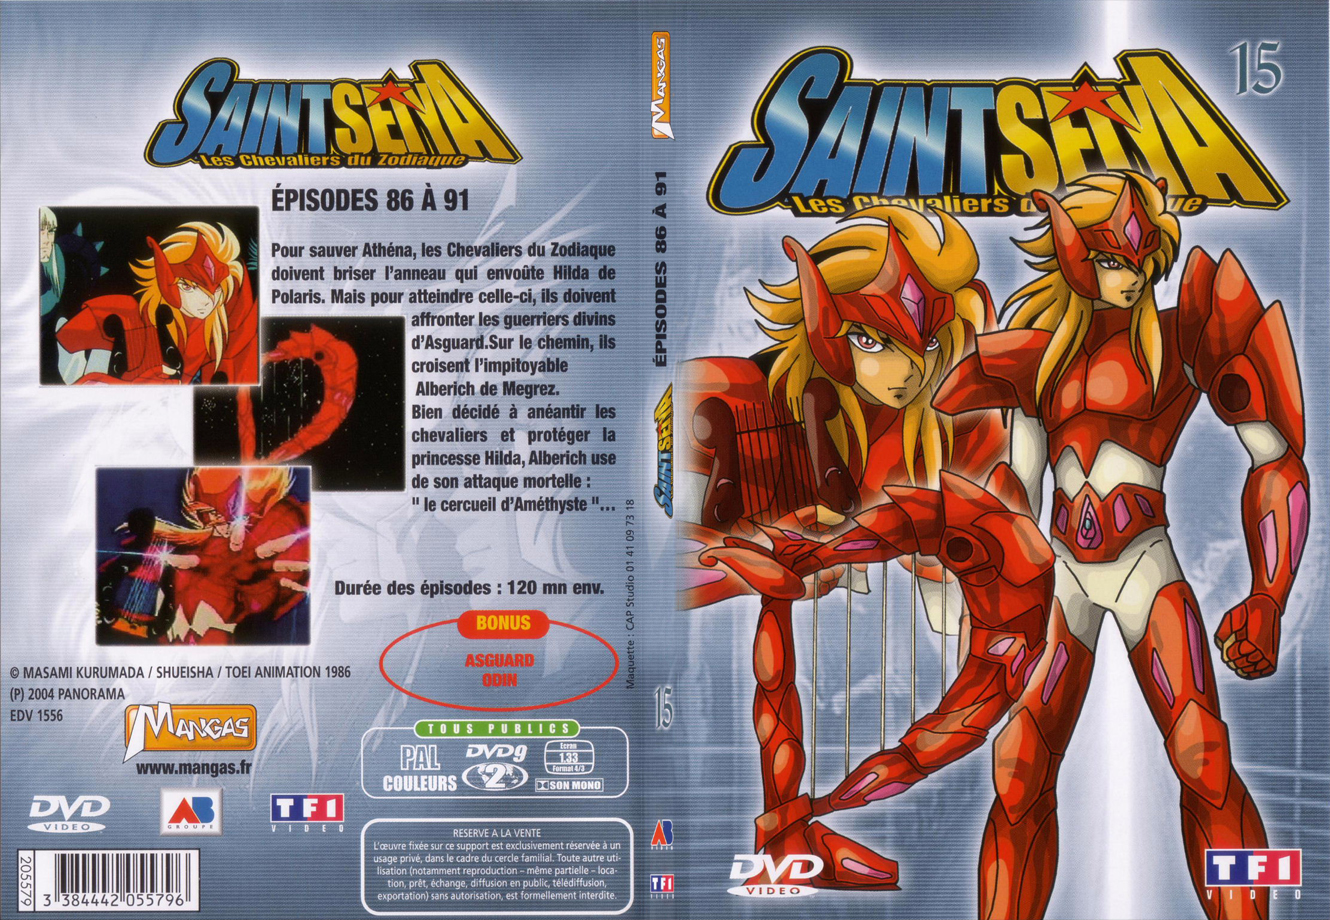 Jaquette DVD Saint Seiya vol 15 - SLIM